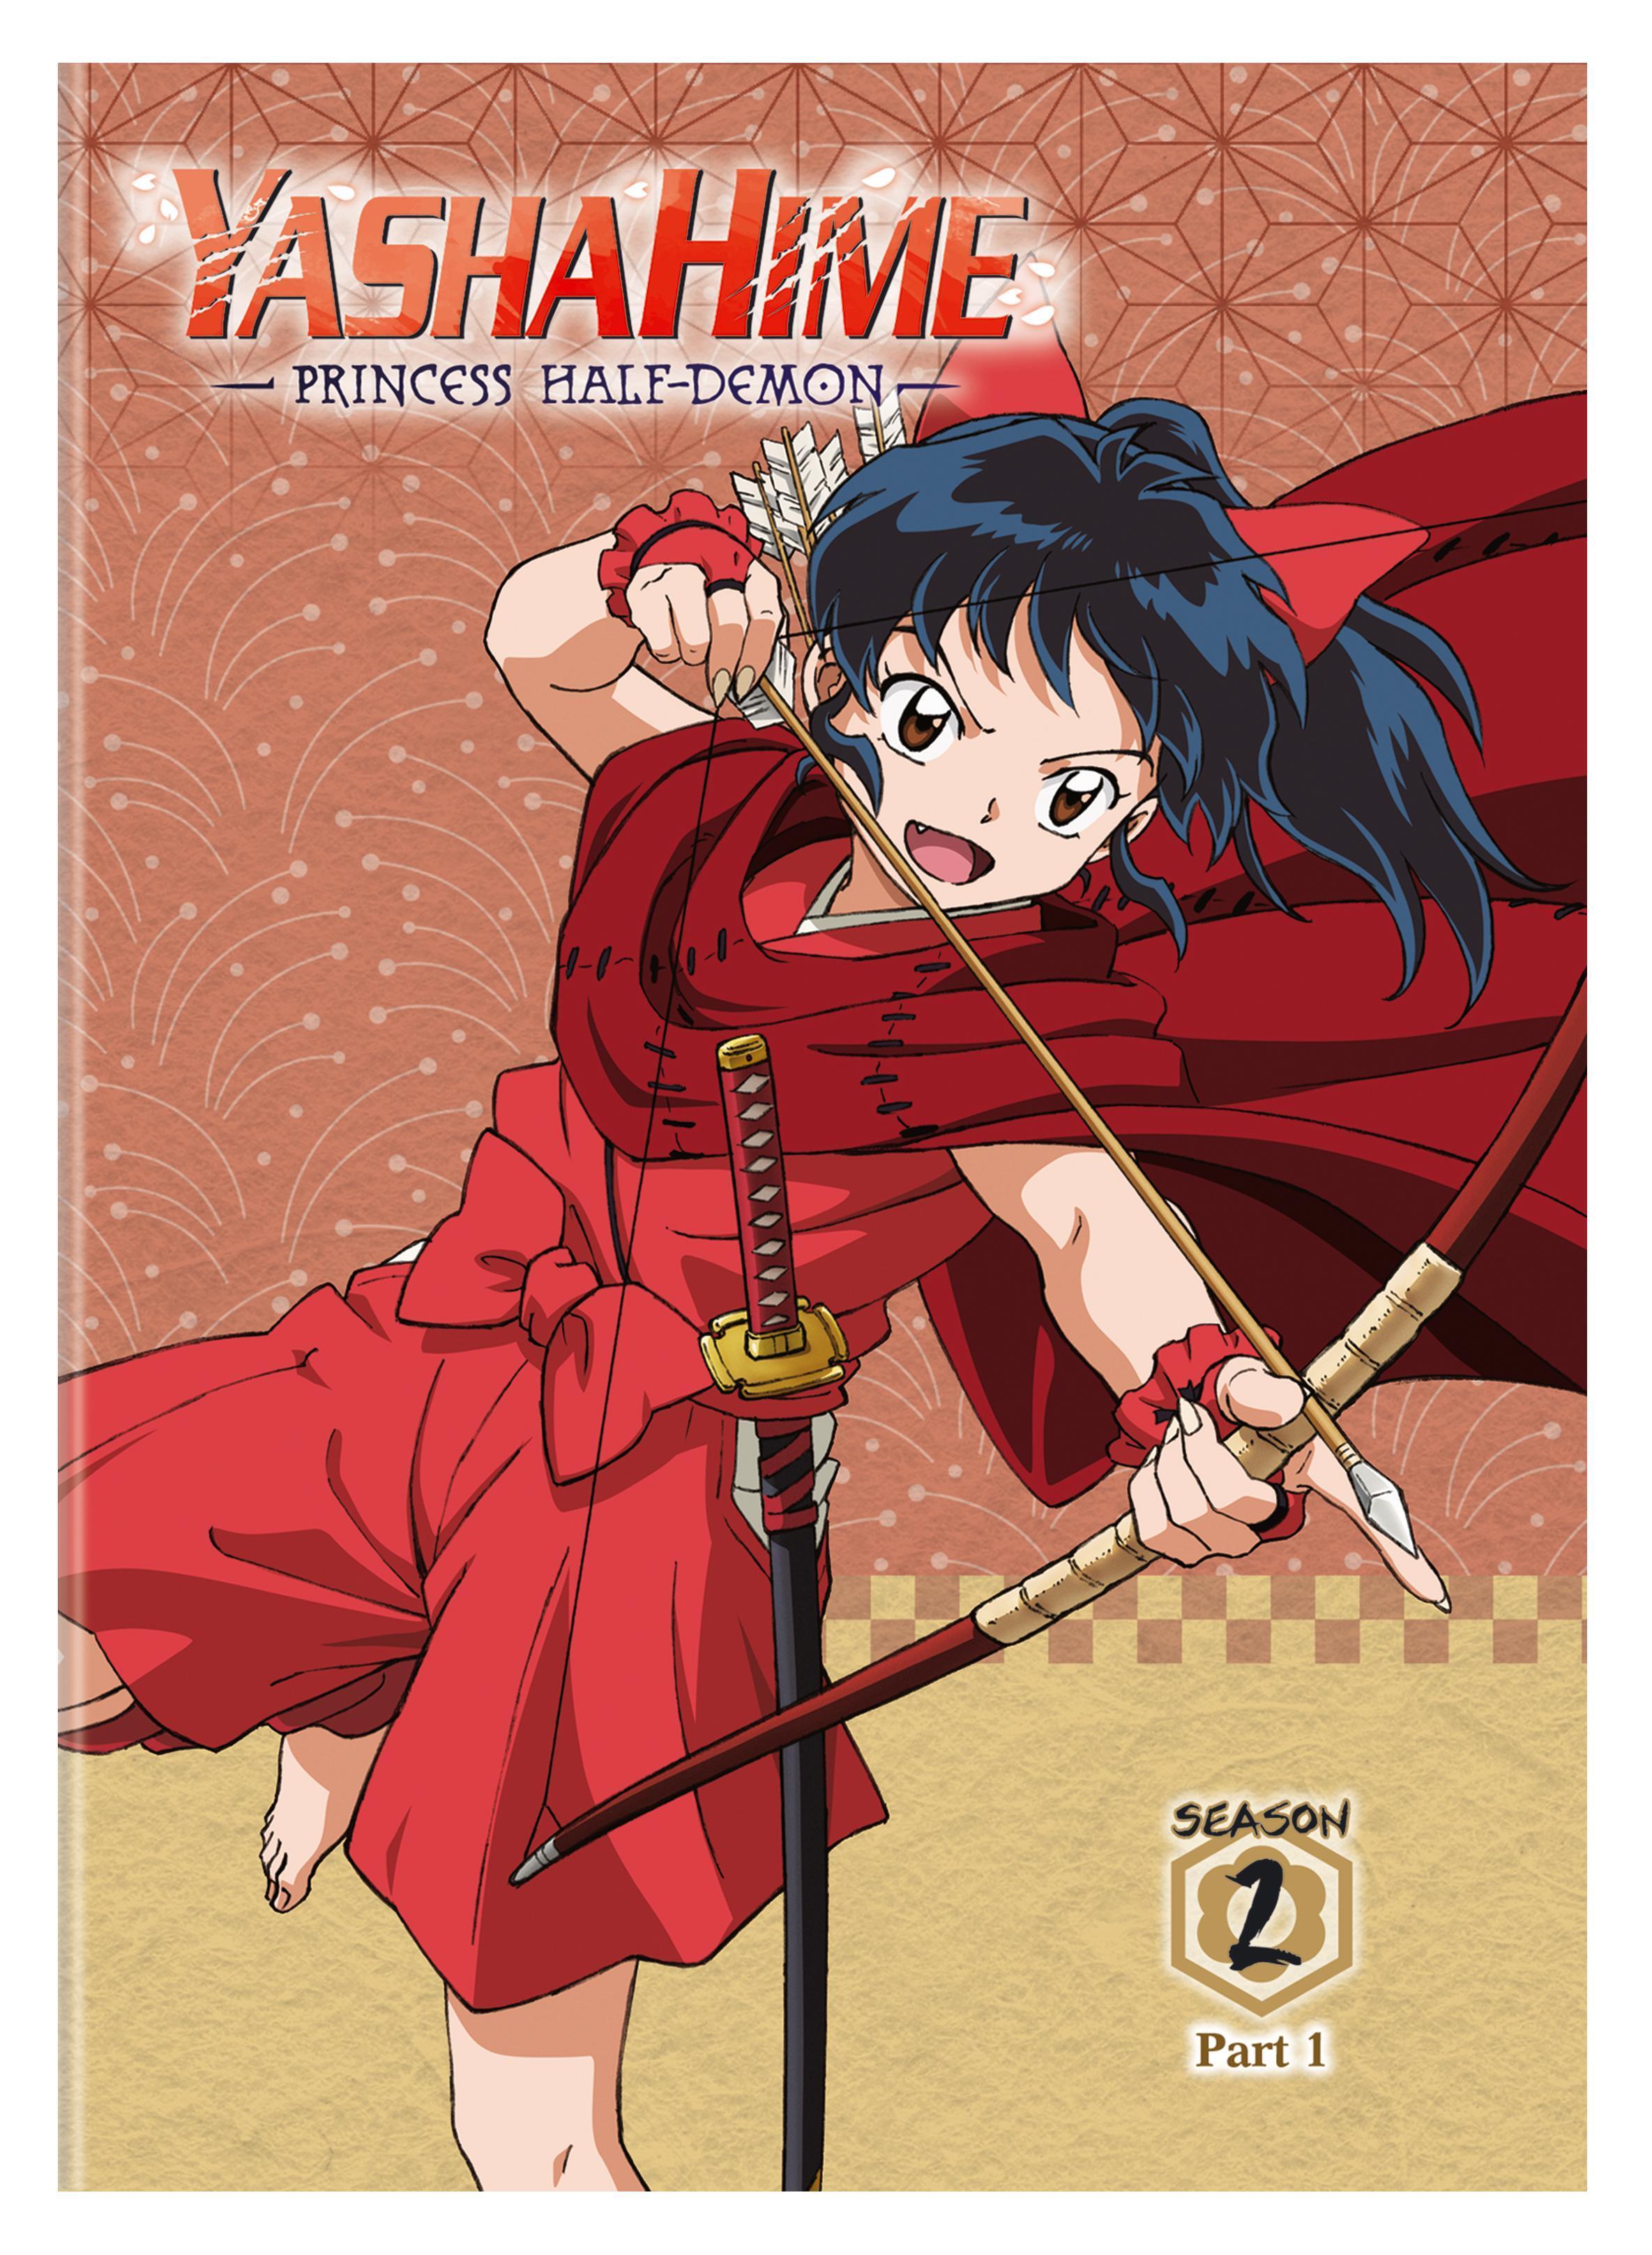 Yashahime: Princess Half-demon - Season 2, Part 1 - DVD [ 2021 ]  - Anime Television On DVD - TV Shows On GRUV